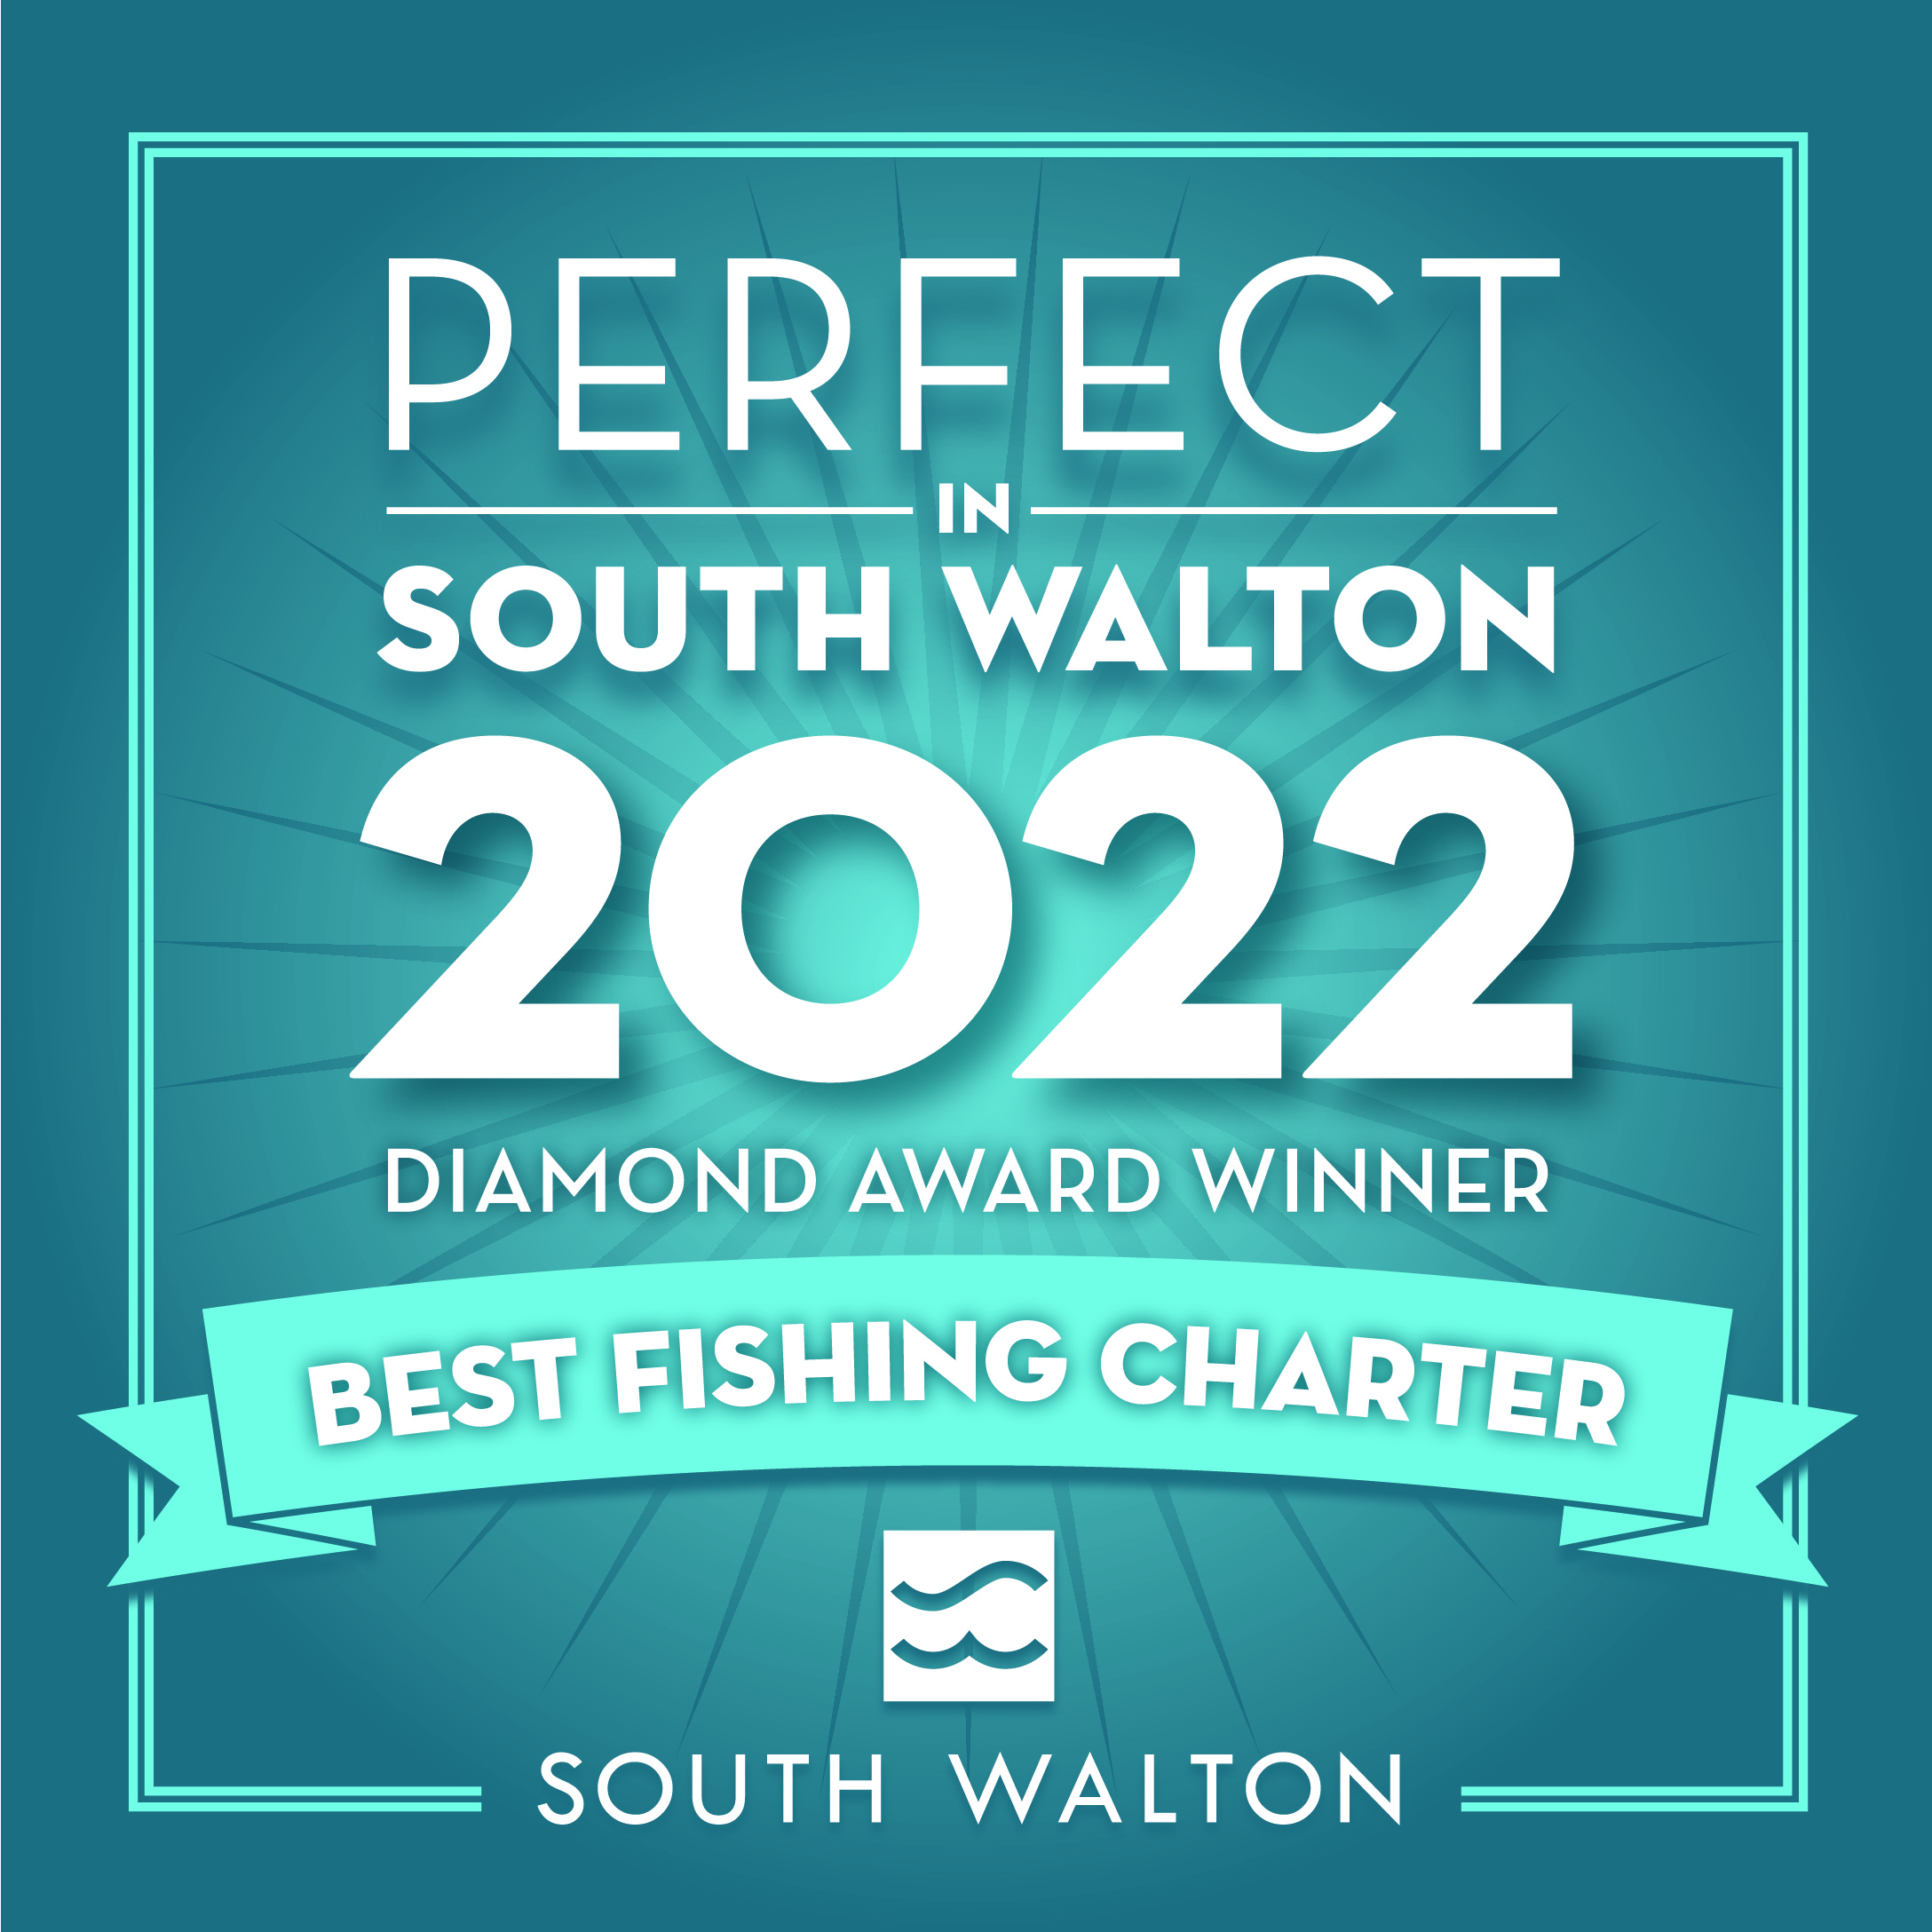 Best Fishing Charter Diamond Award Winner